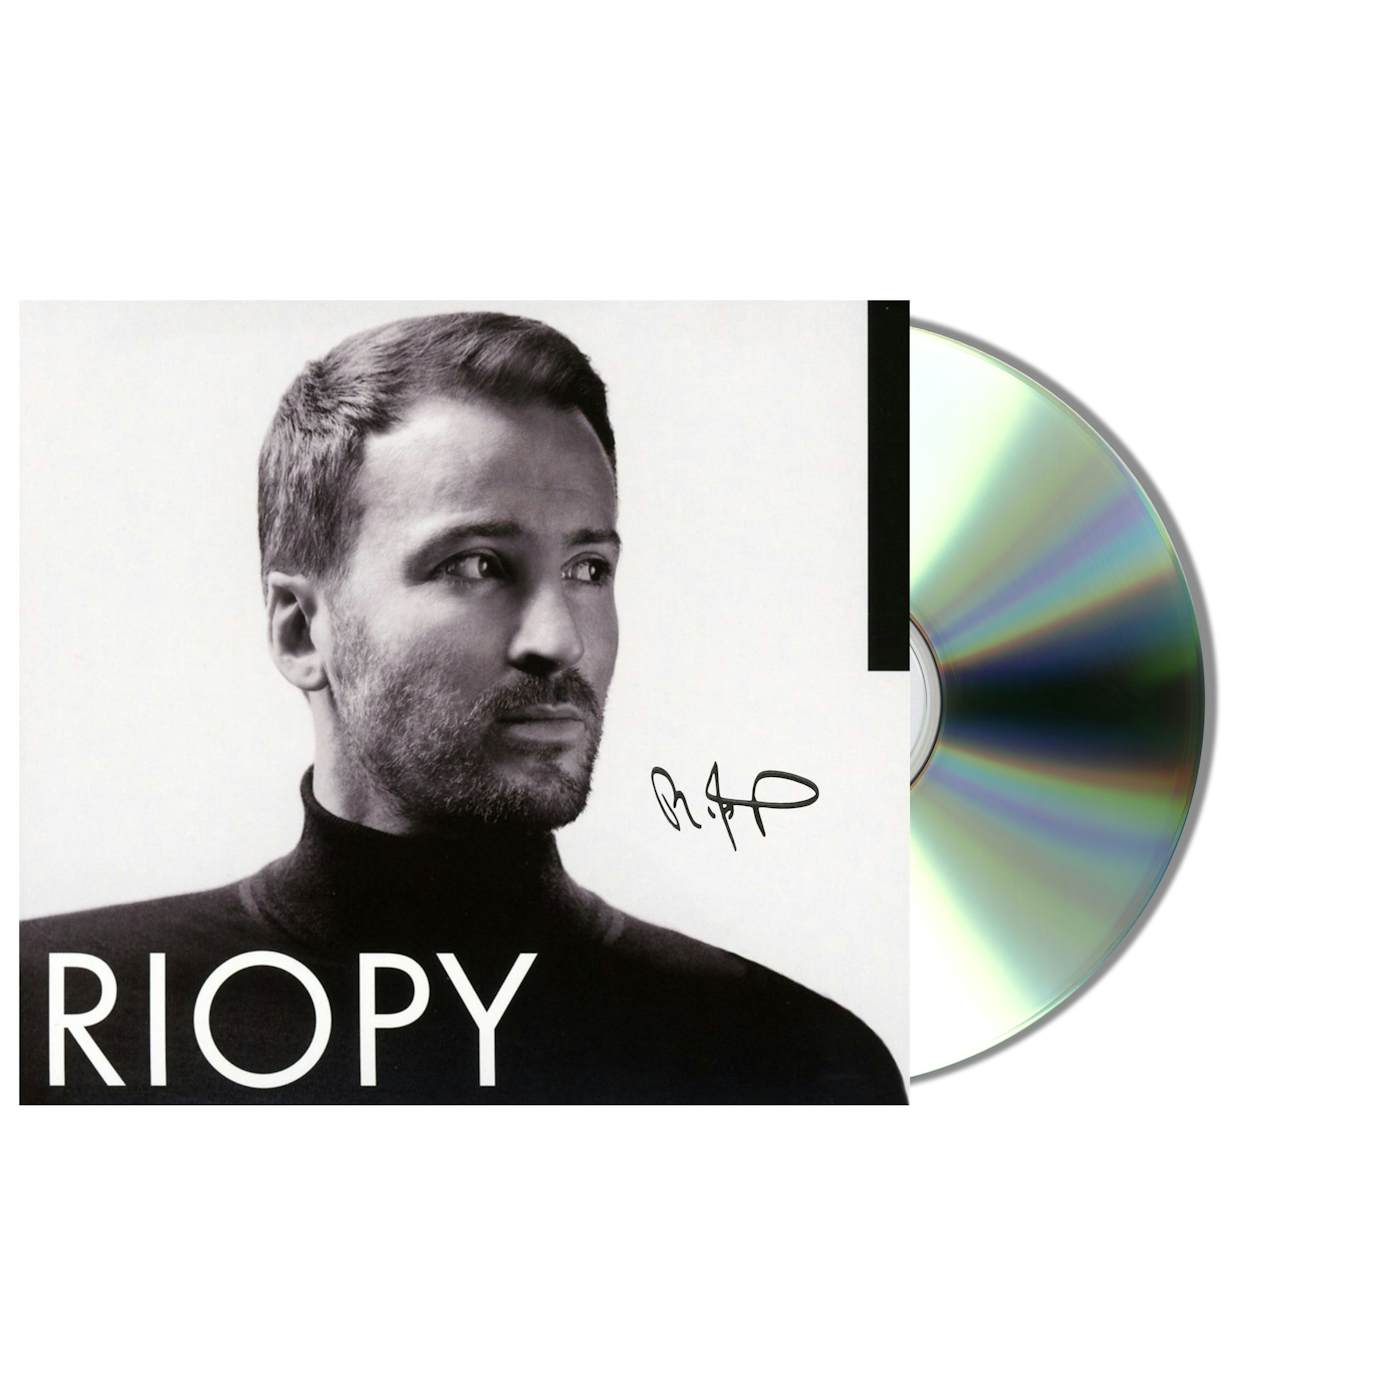 RIOPY Signed CD